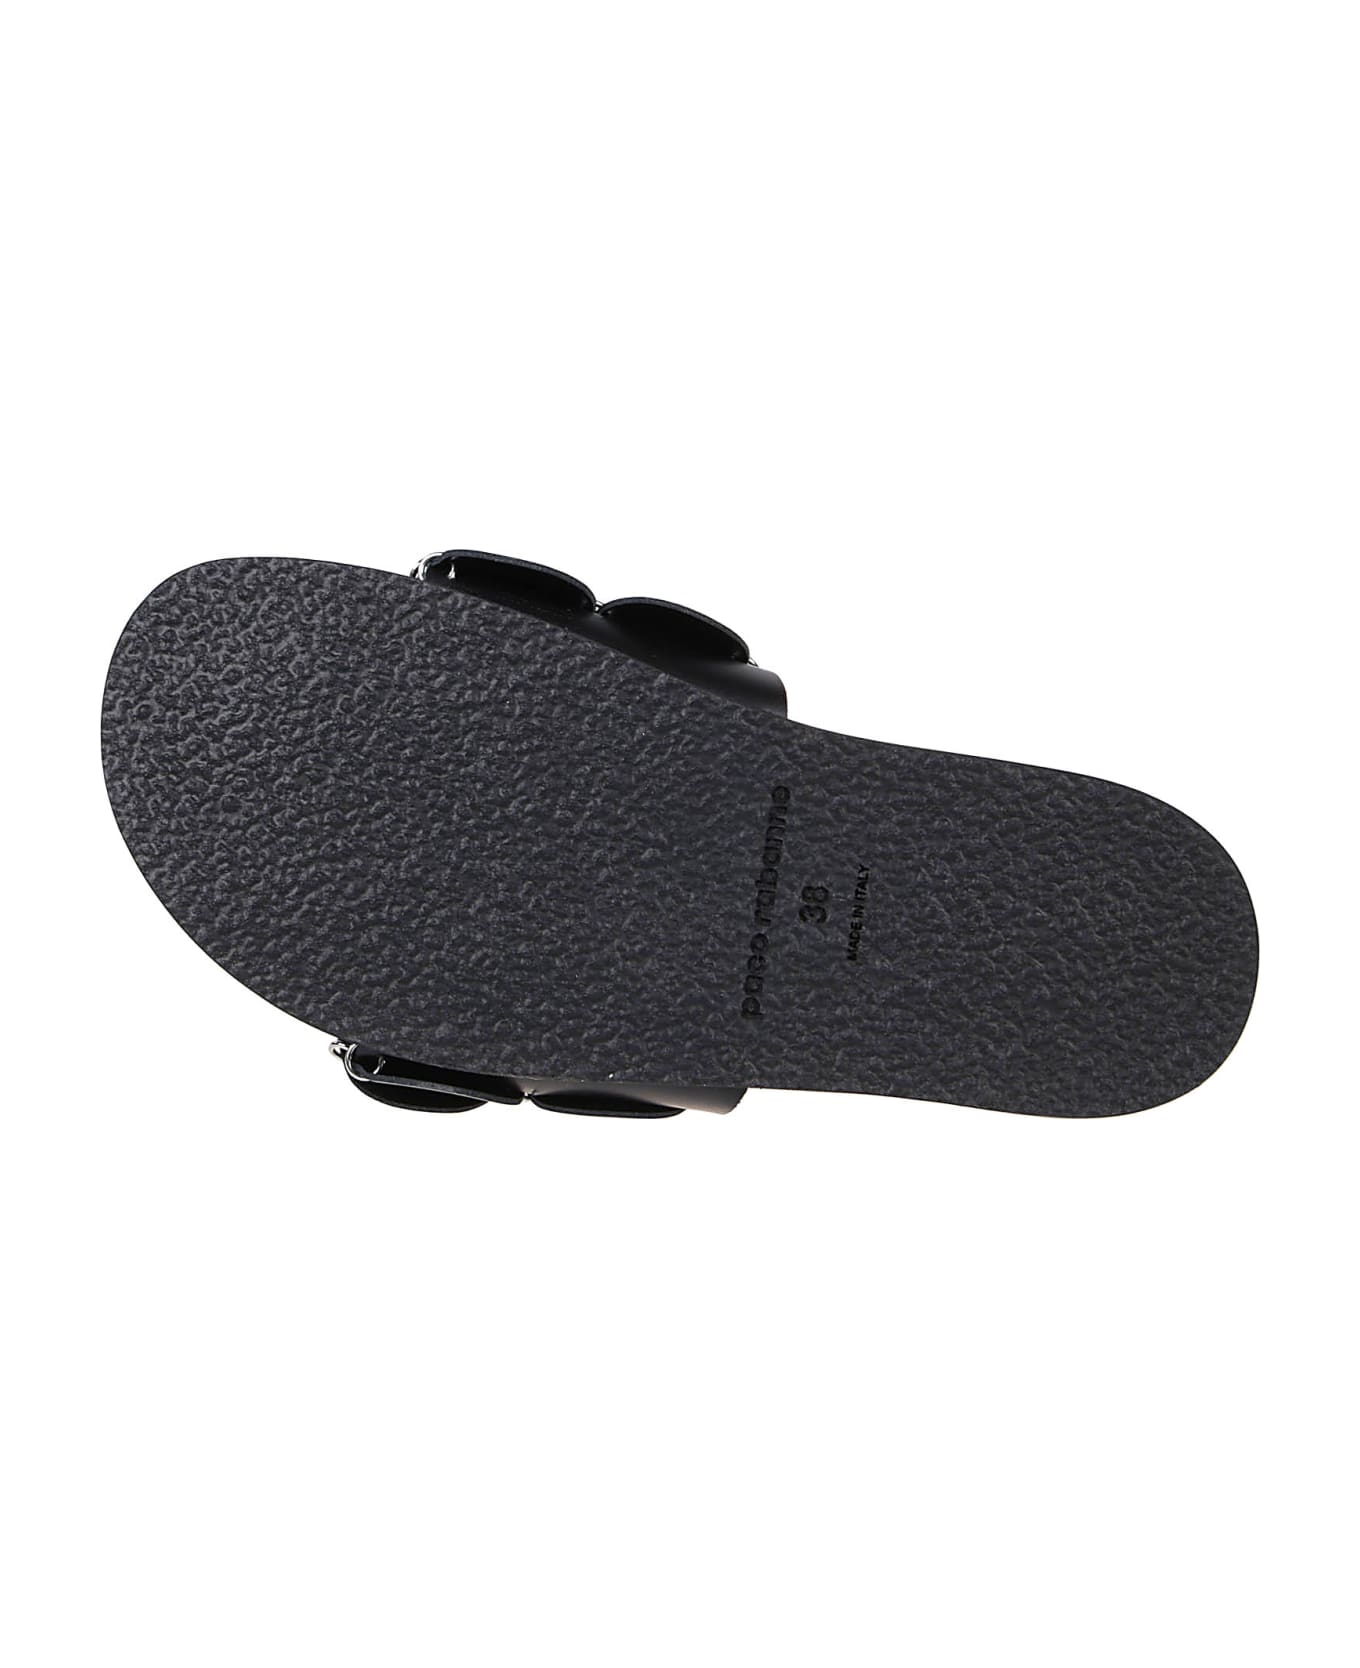 Paco Rabanne Pacoio Slide Sandals - Black